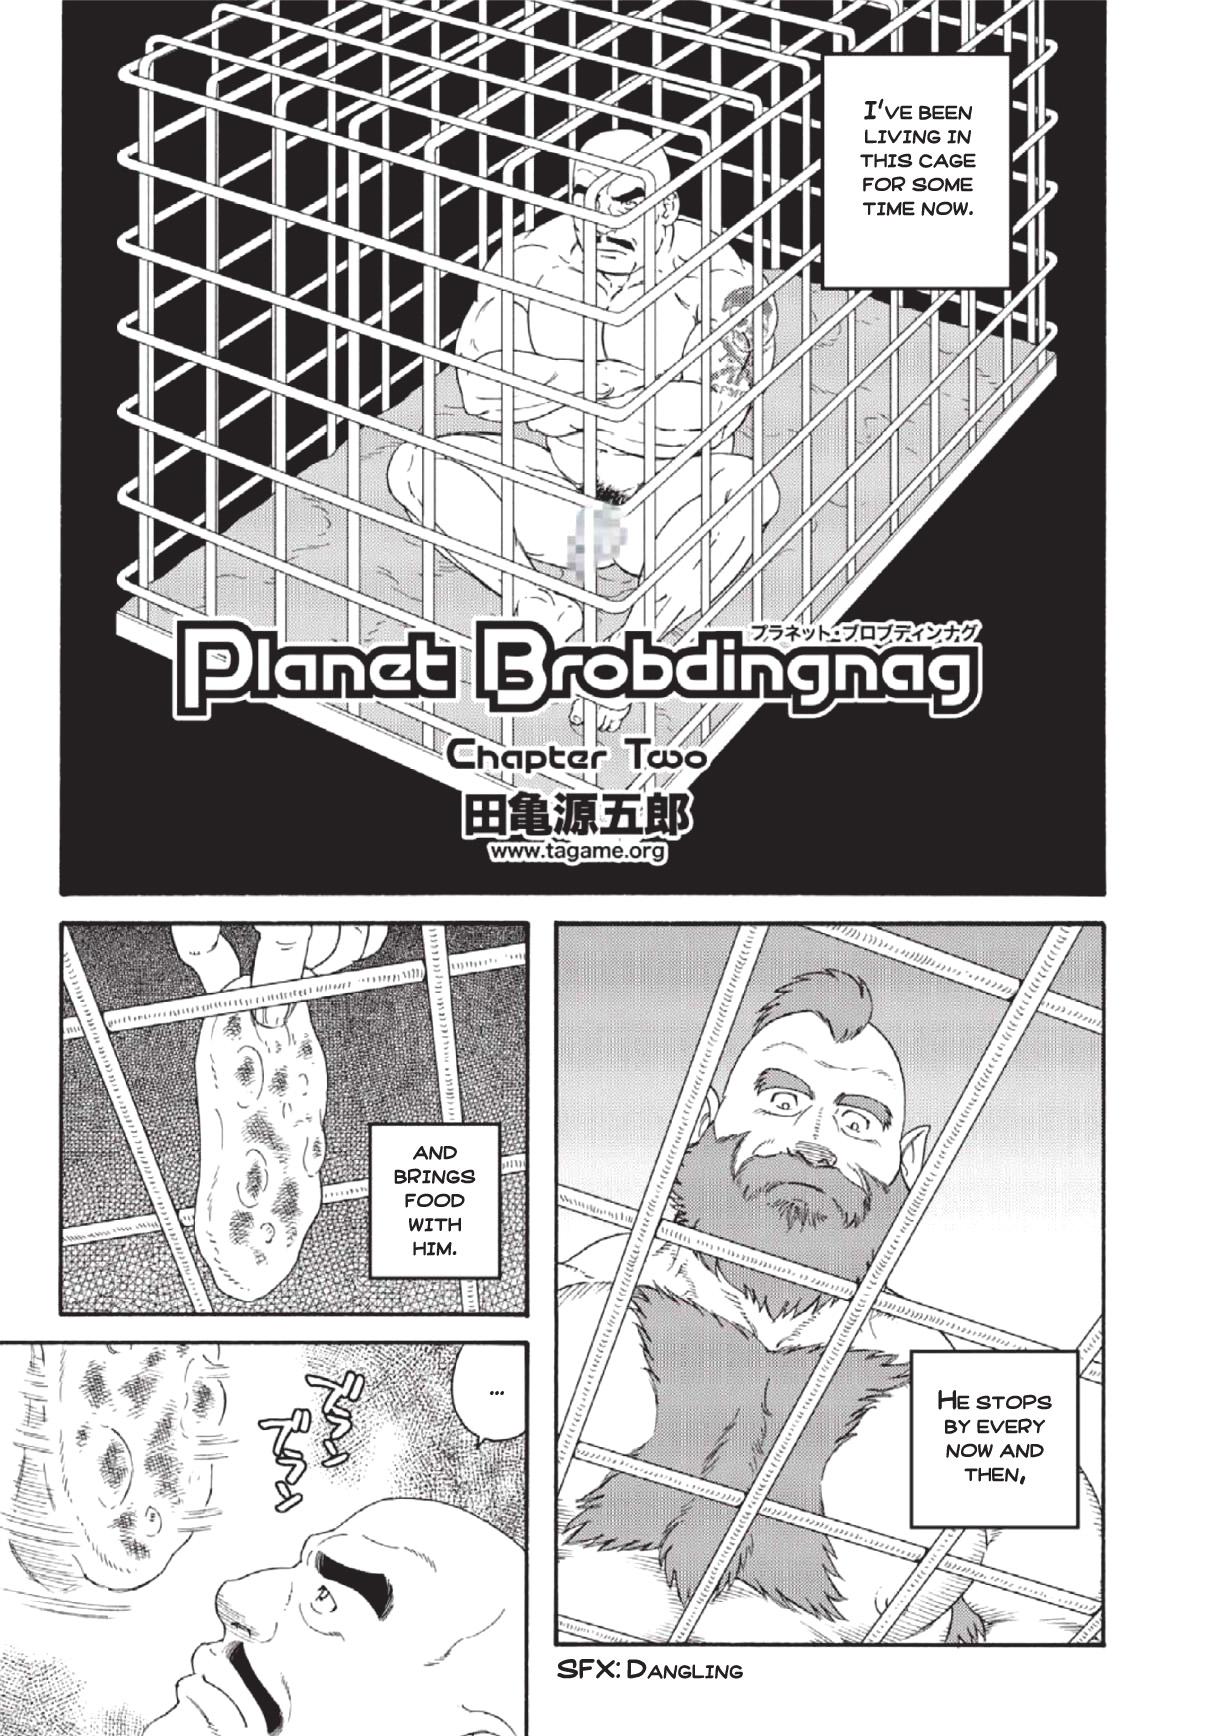 Planet Brobdingnag chapter 2 0